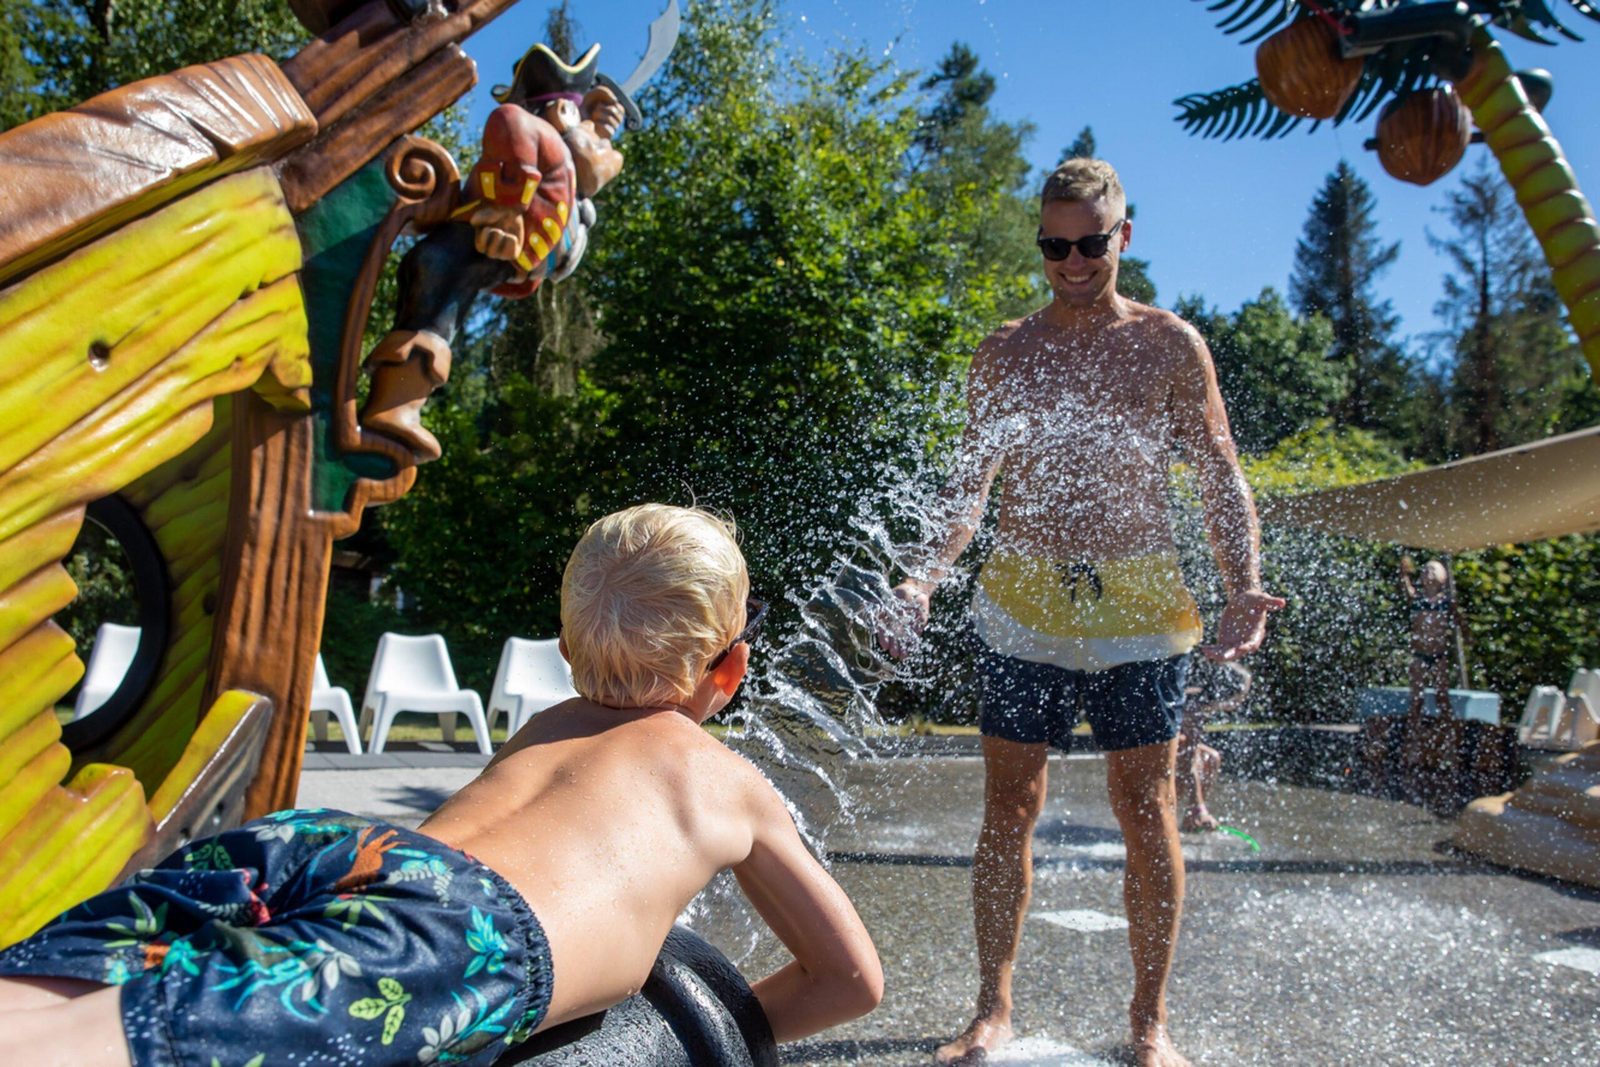 Outdoor pool & water spray park